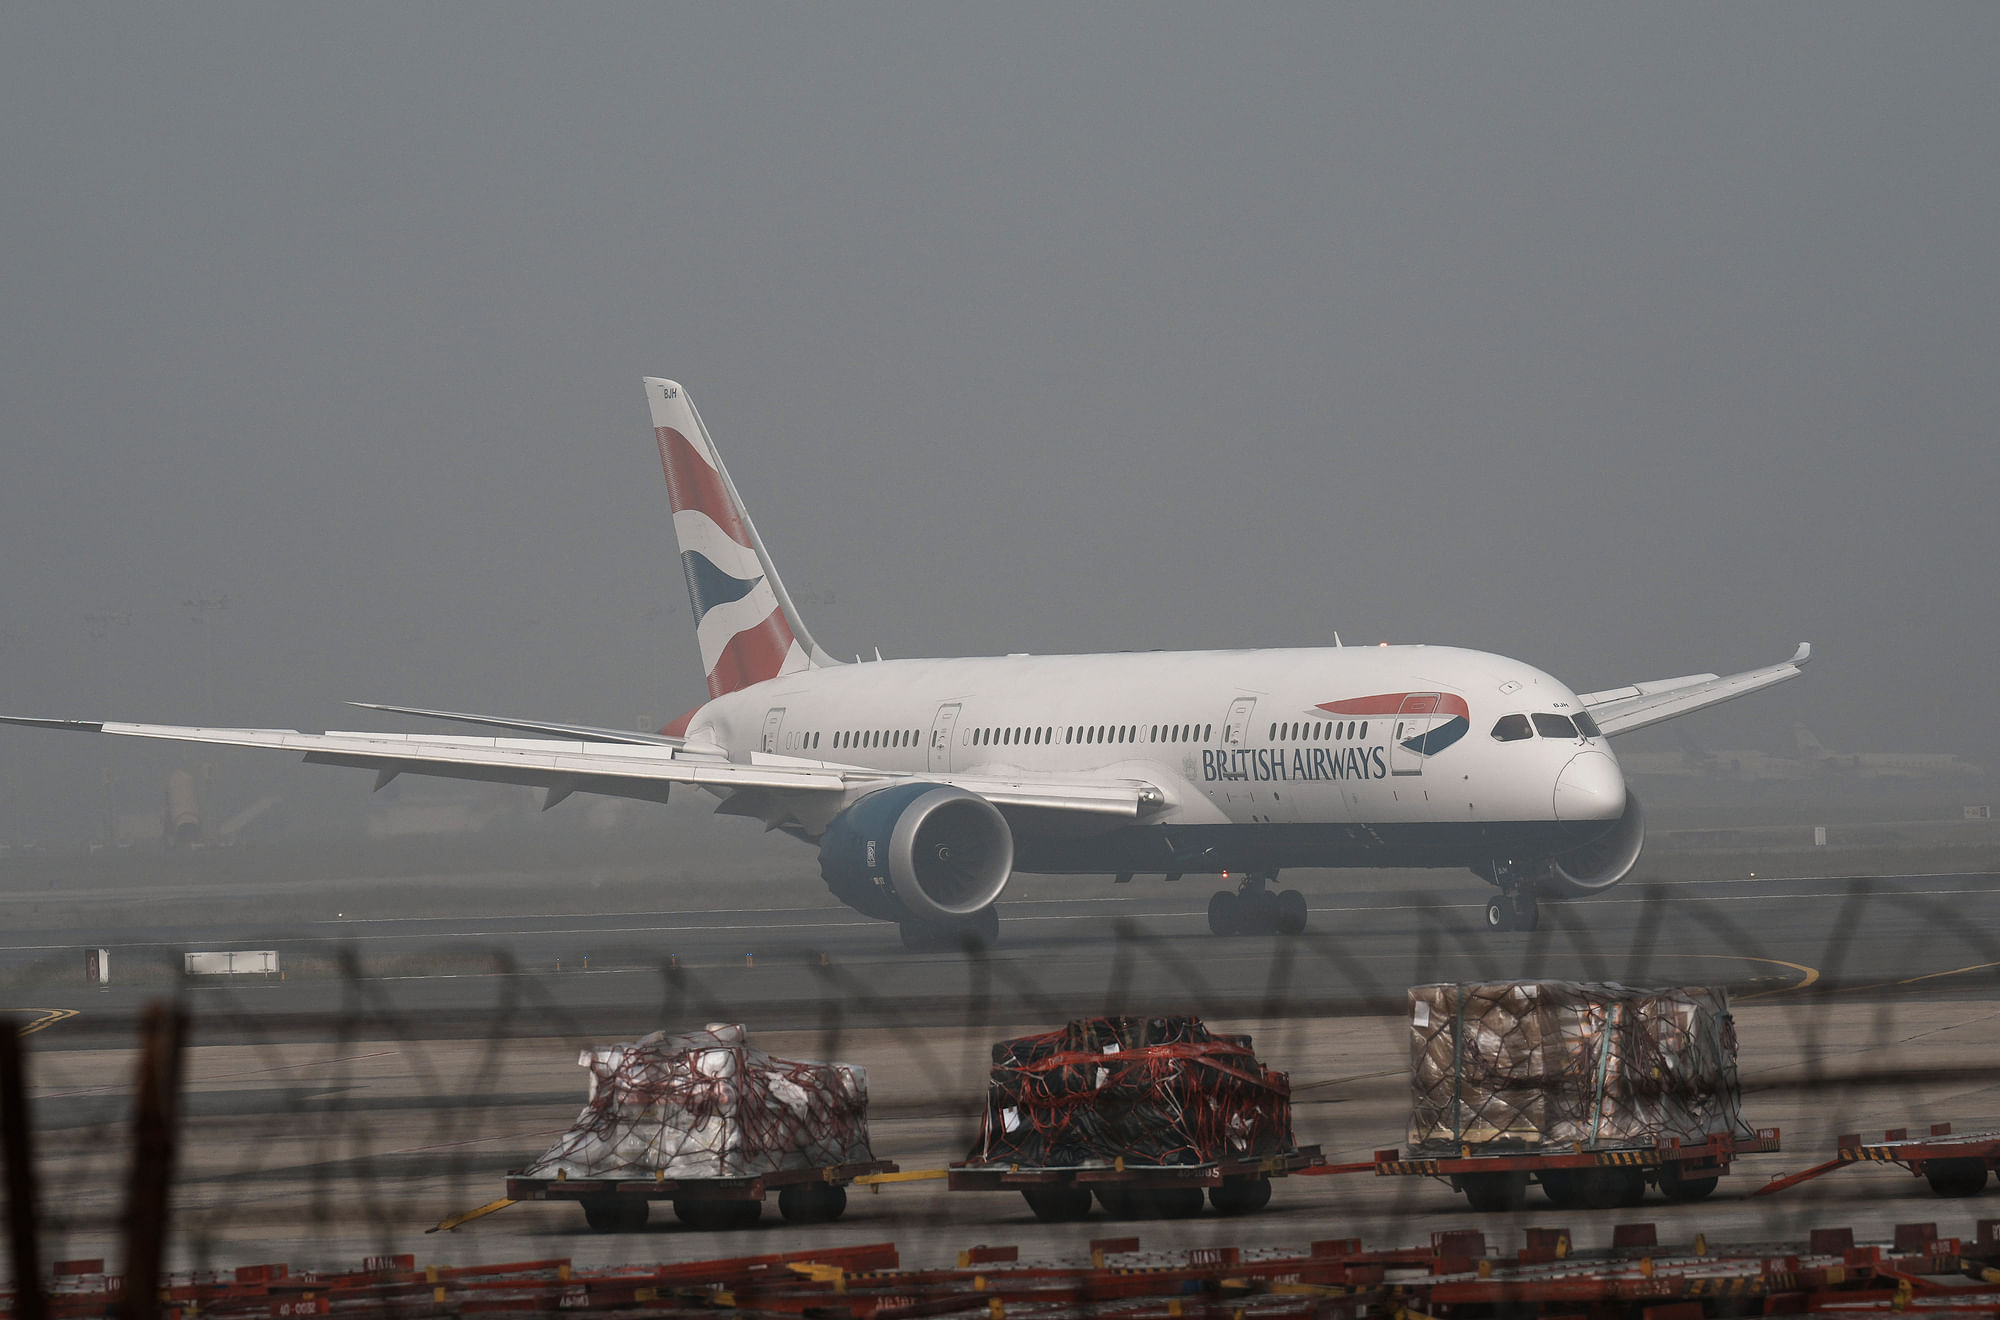 <div class="paragraphs"><p>चेन्नई अंतर्राष्ट्रीय हवाई अड्डे पर  ब्रिटिश एयरवेज़ का एक विमान</p></div>